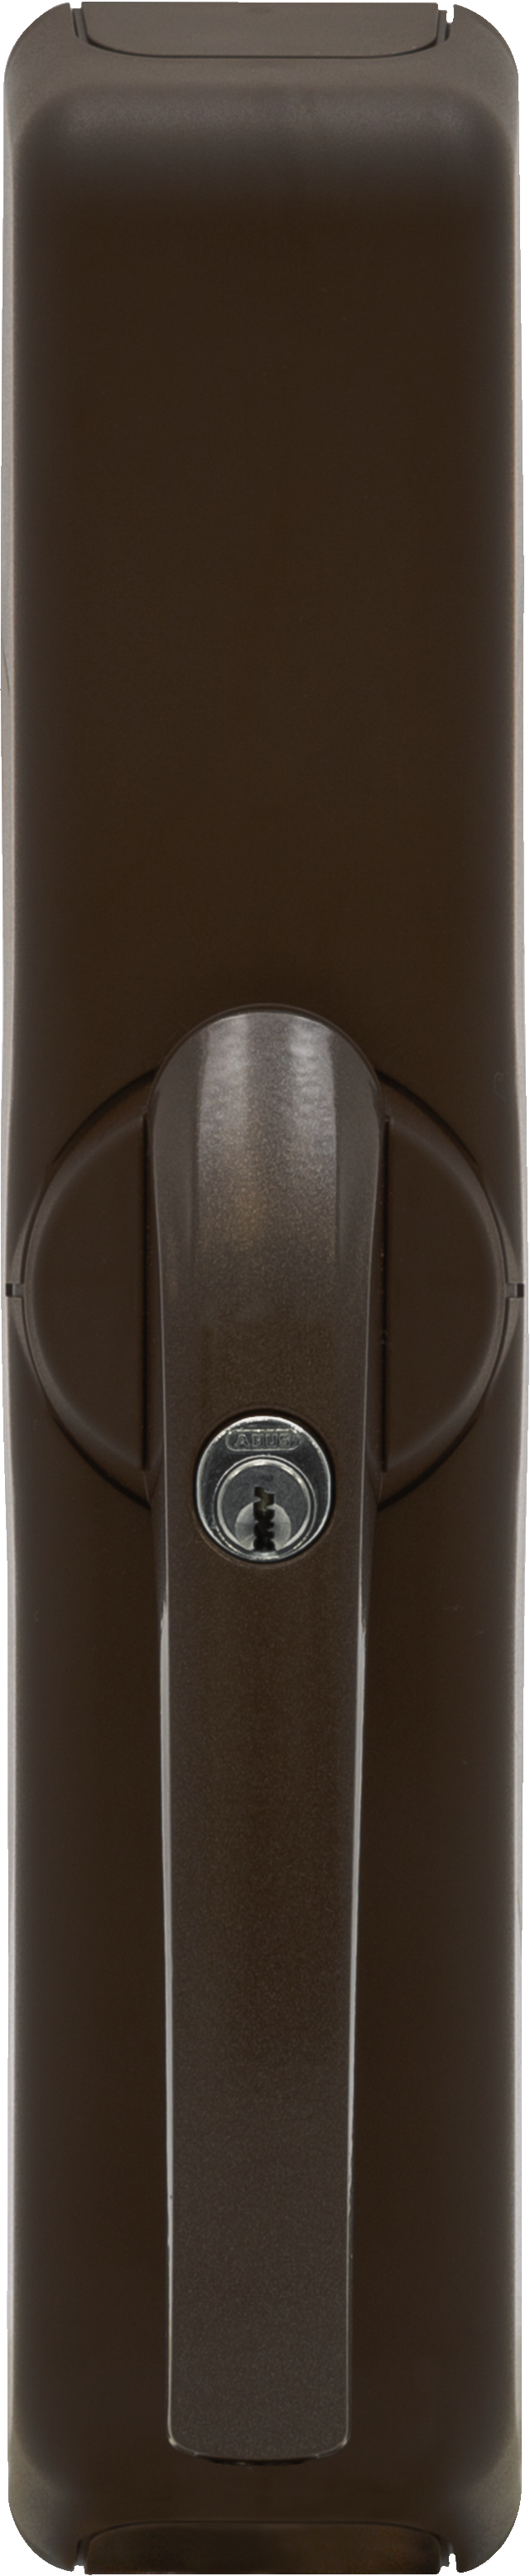 wireless window lock drive HomeTec Pro FCA3000 brown